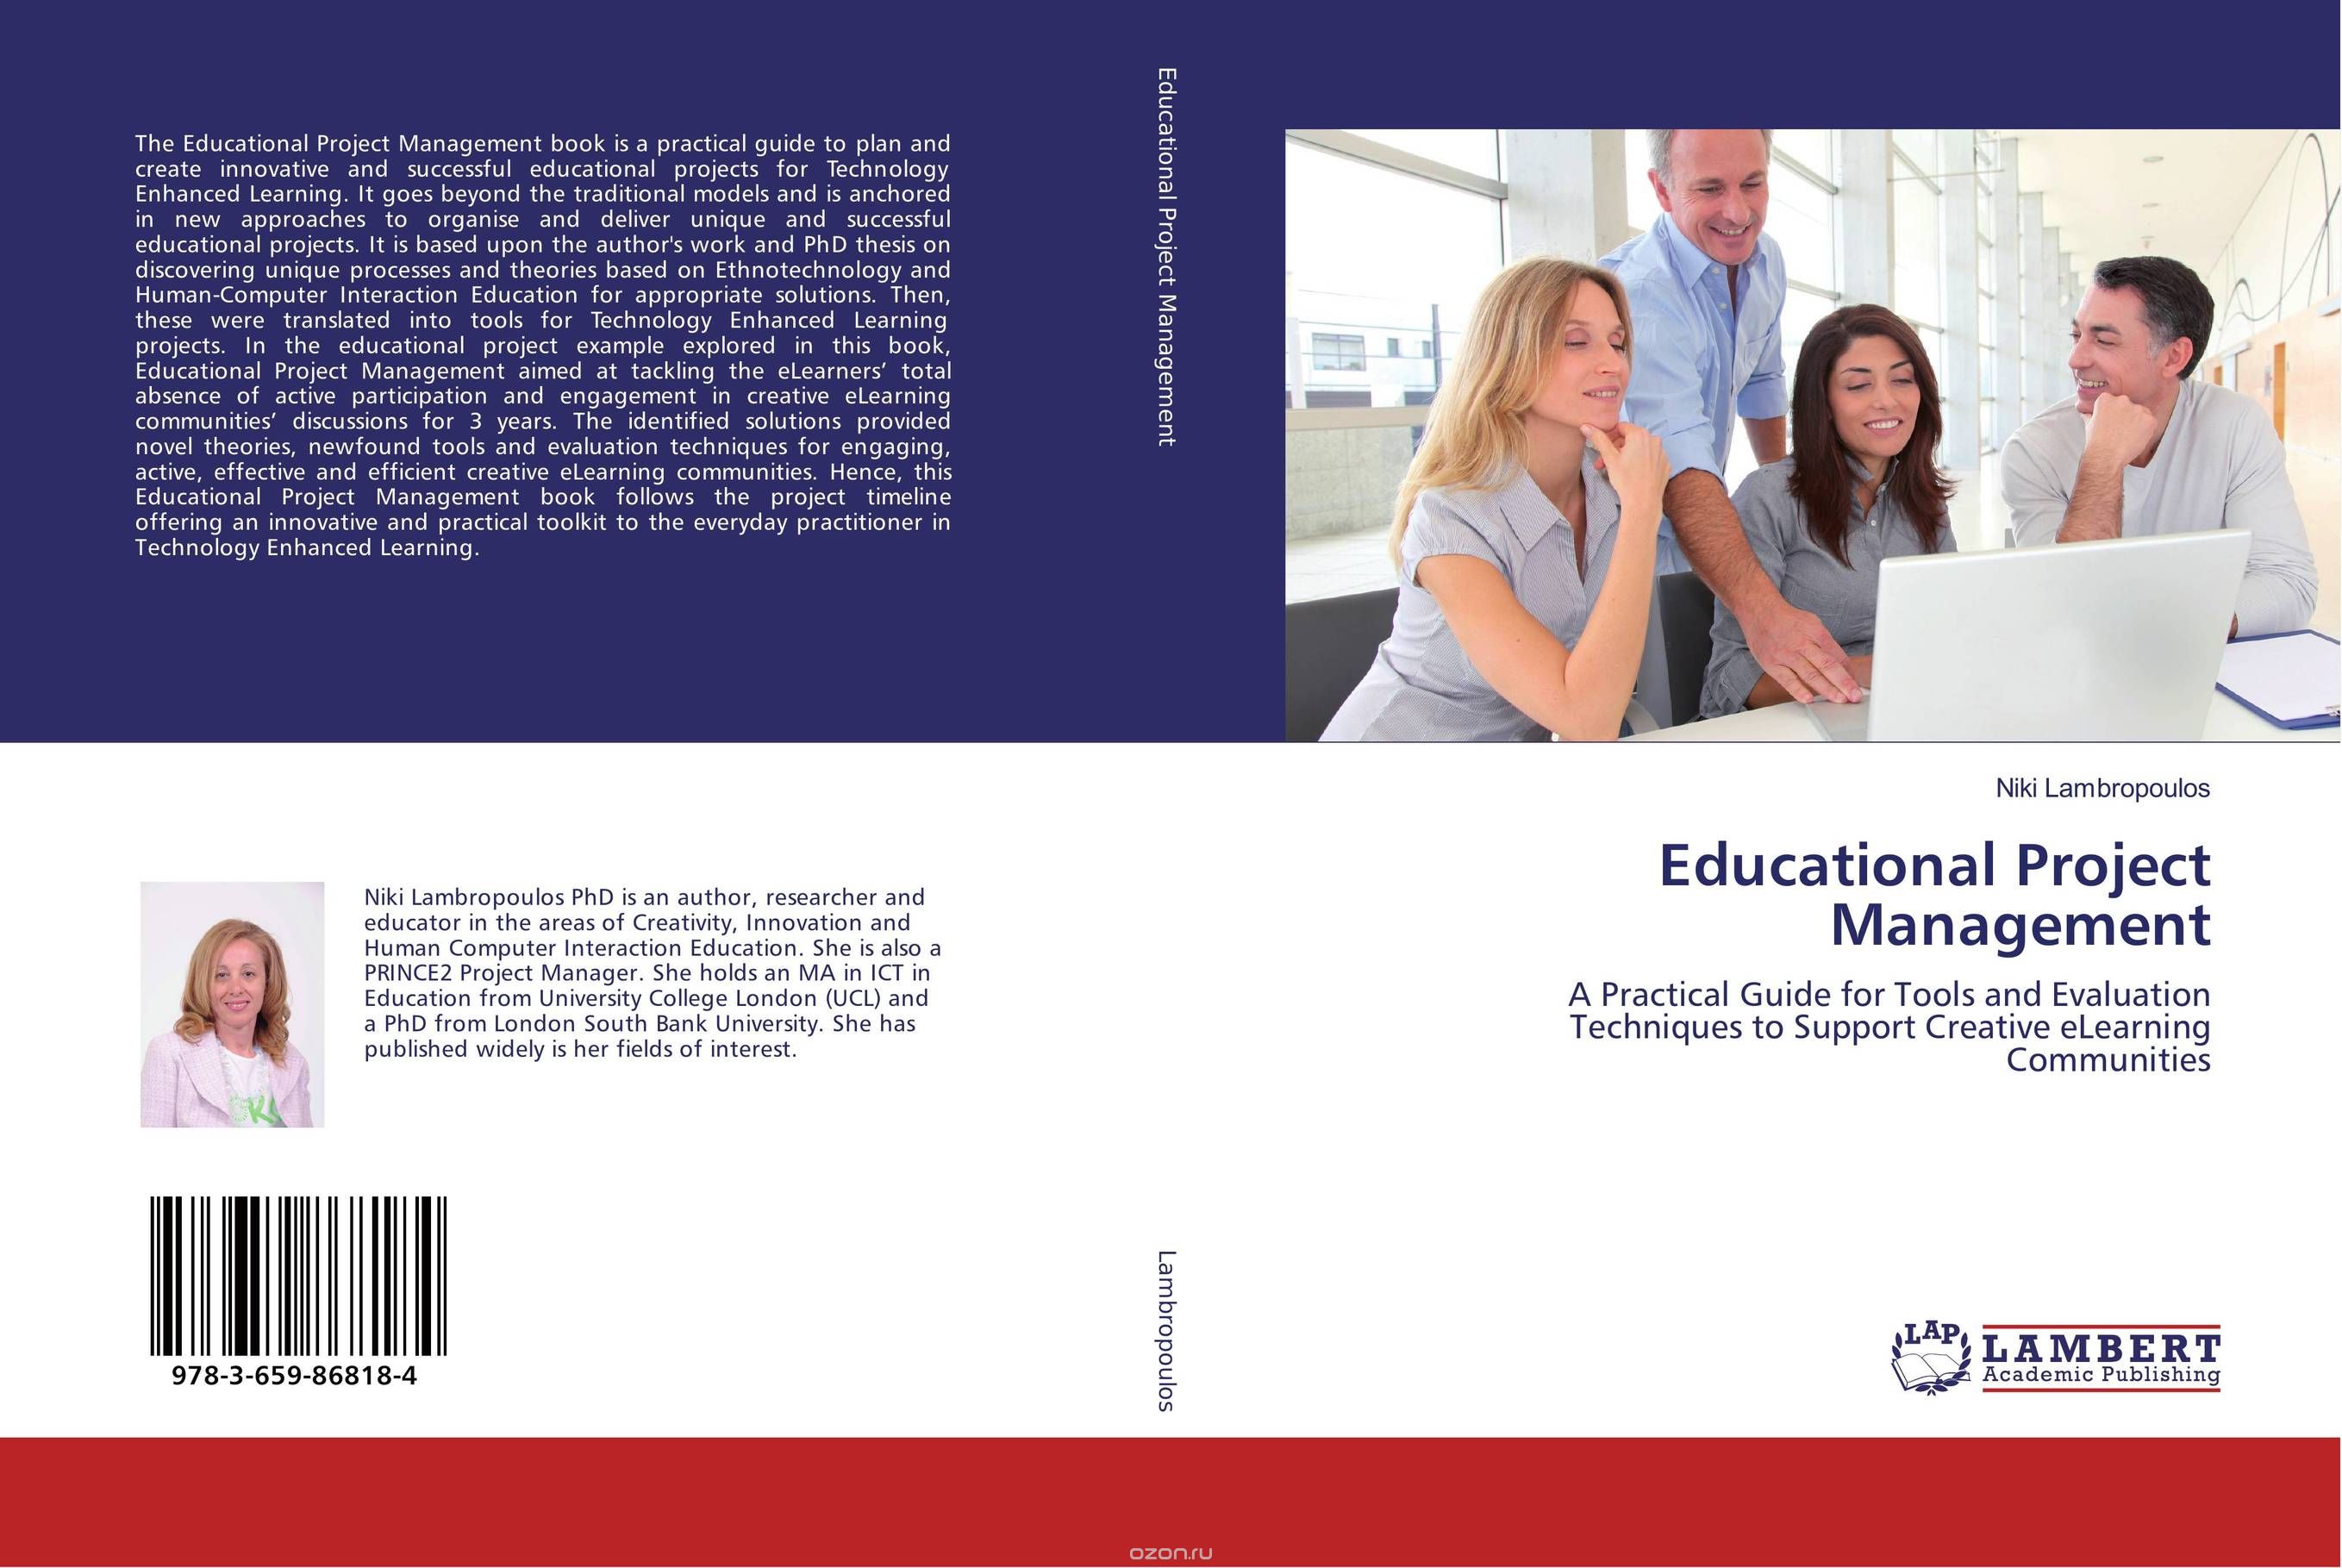 Educational Project Management